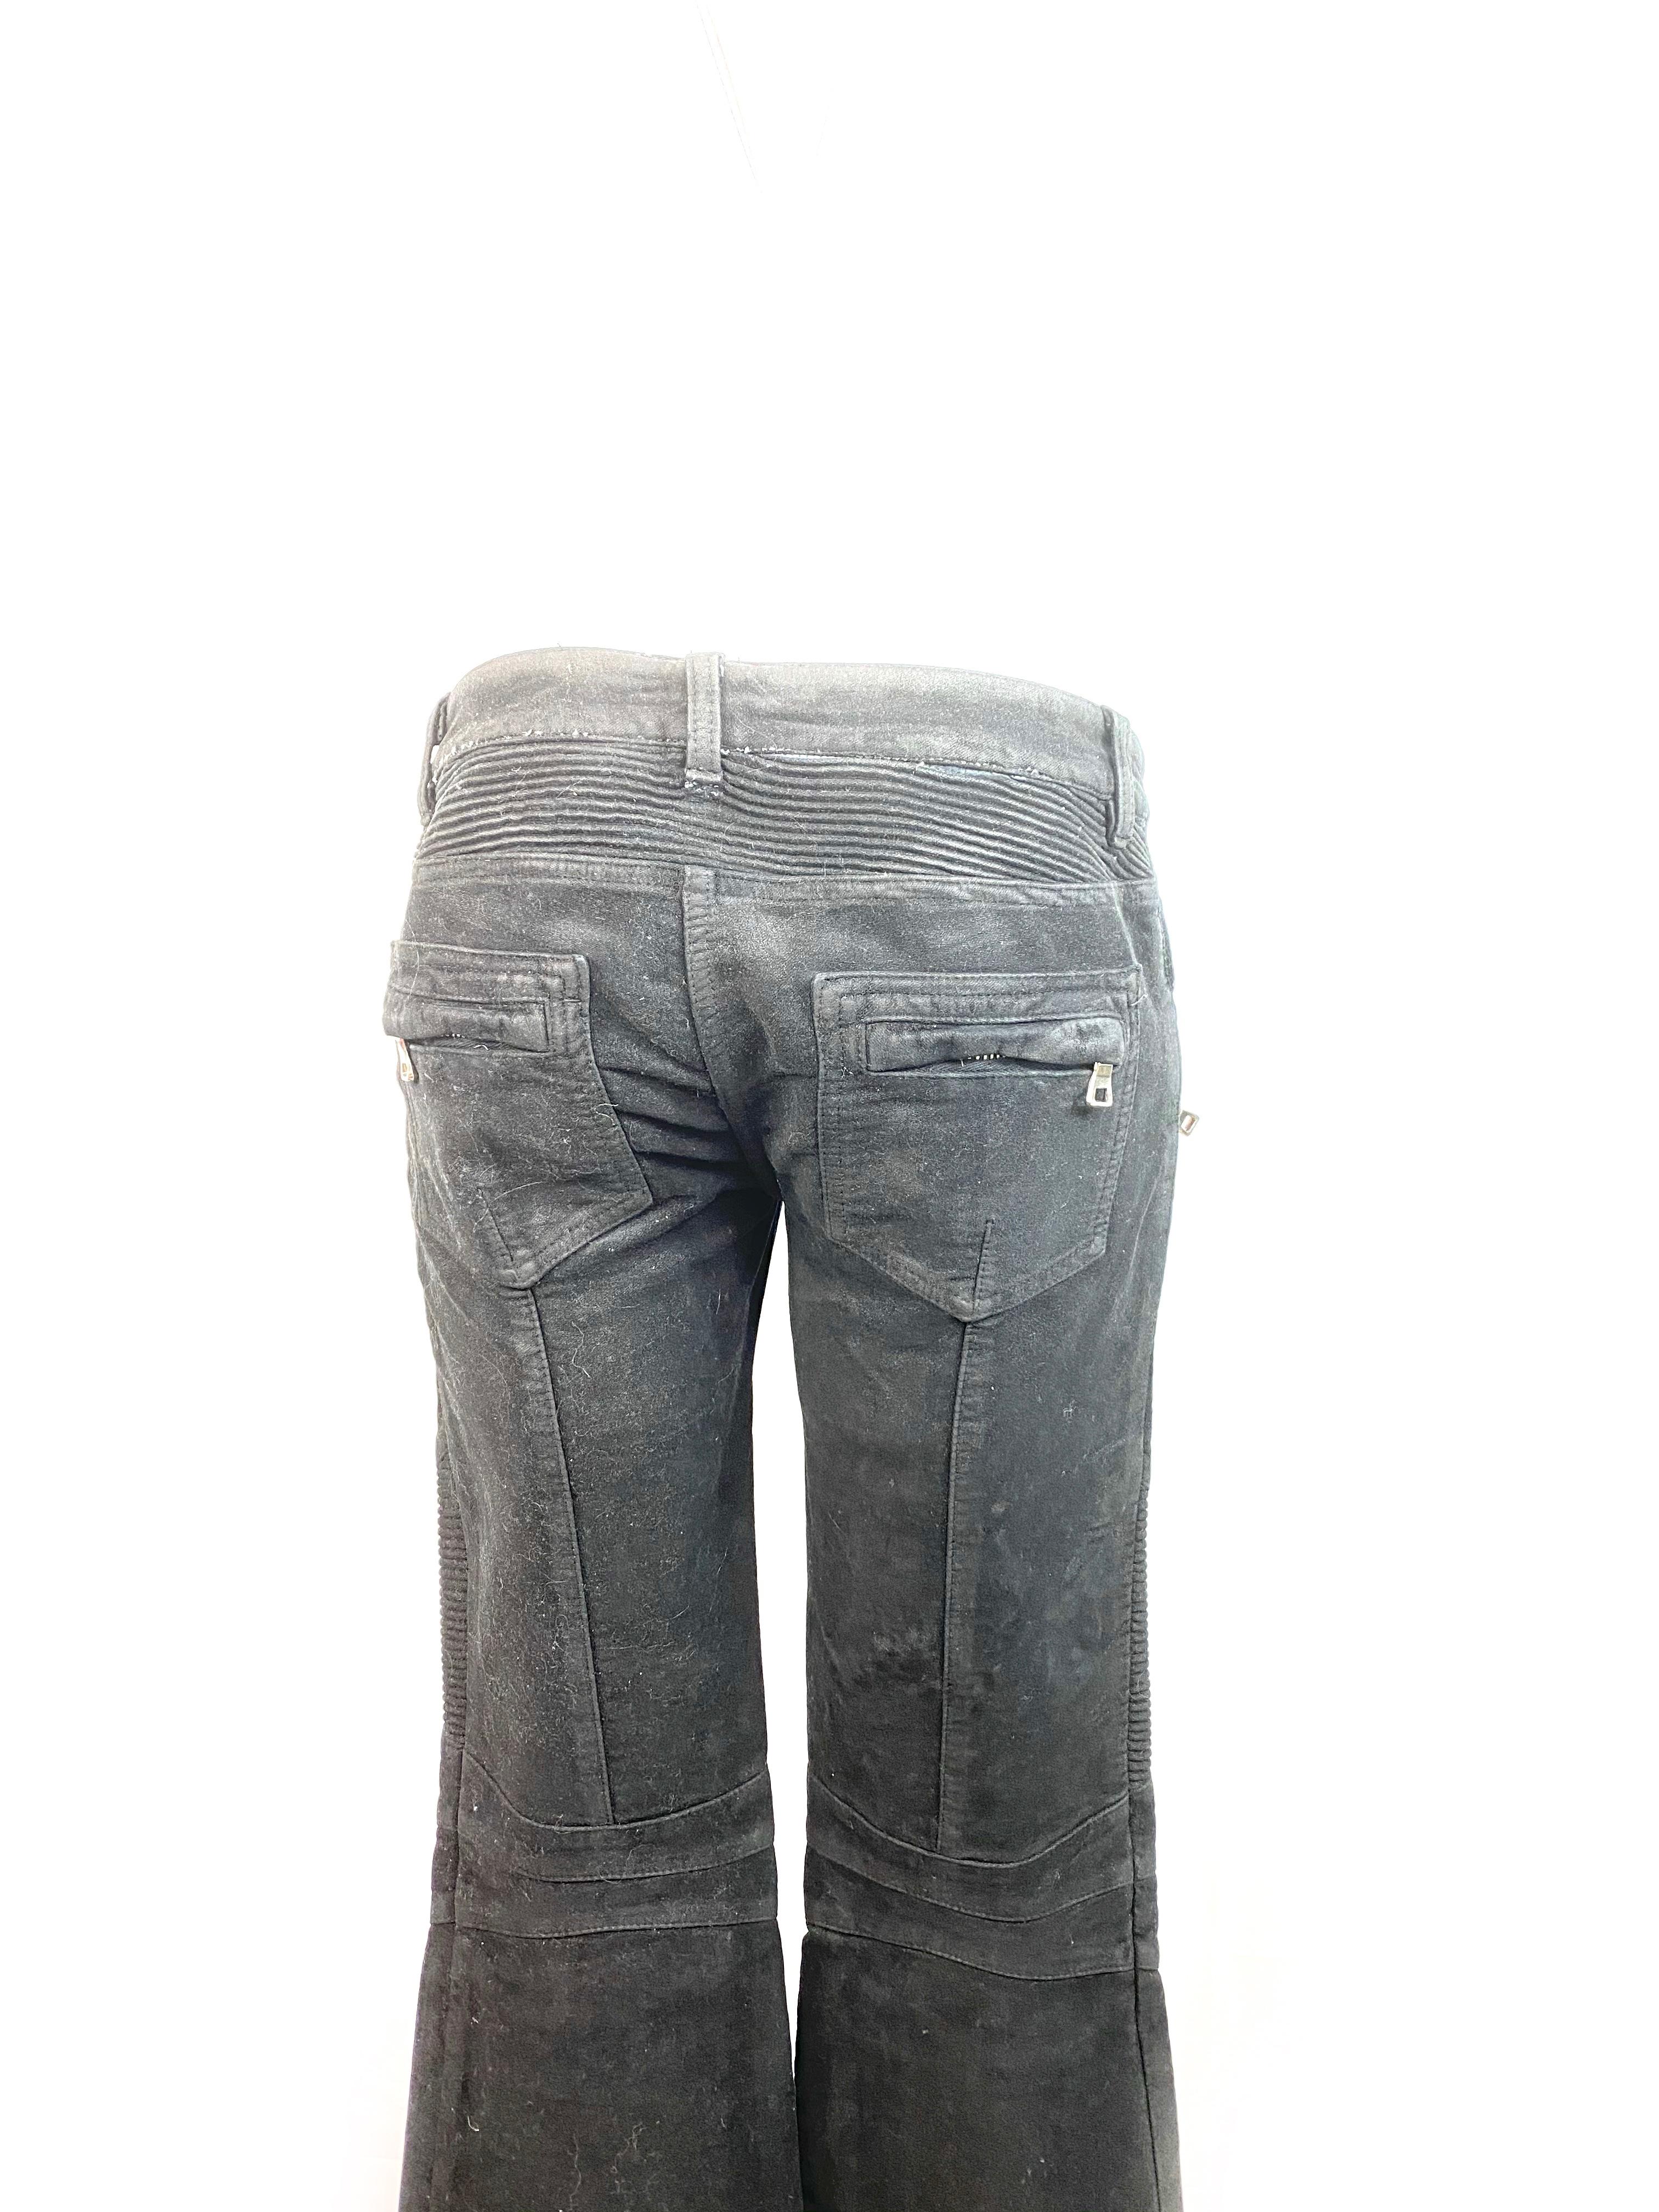 Women's Balmain Black Suede Flare Jeans Pant Size 40 For Sale